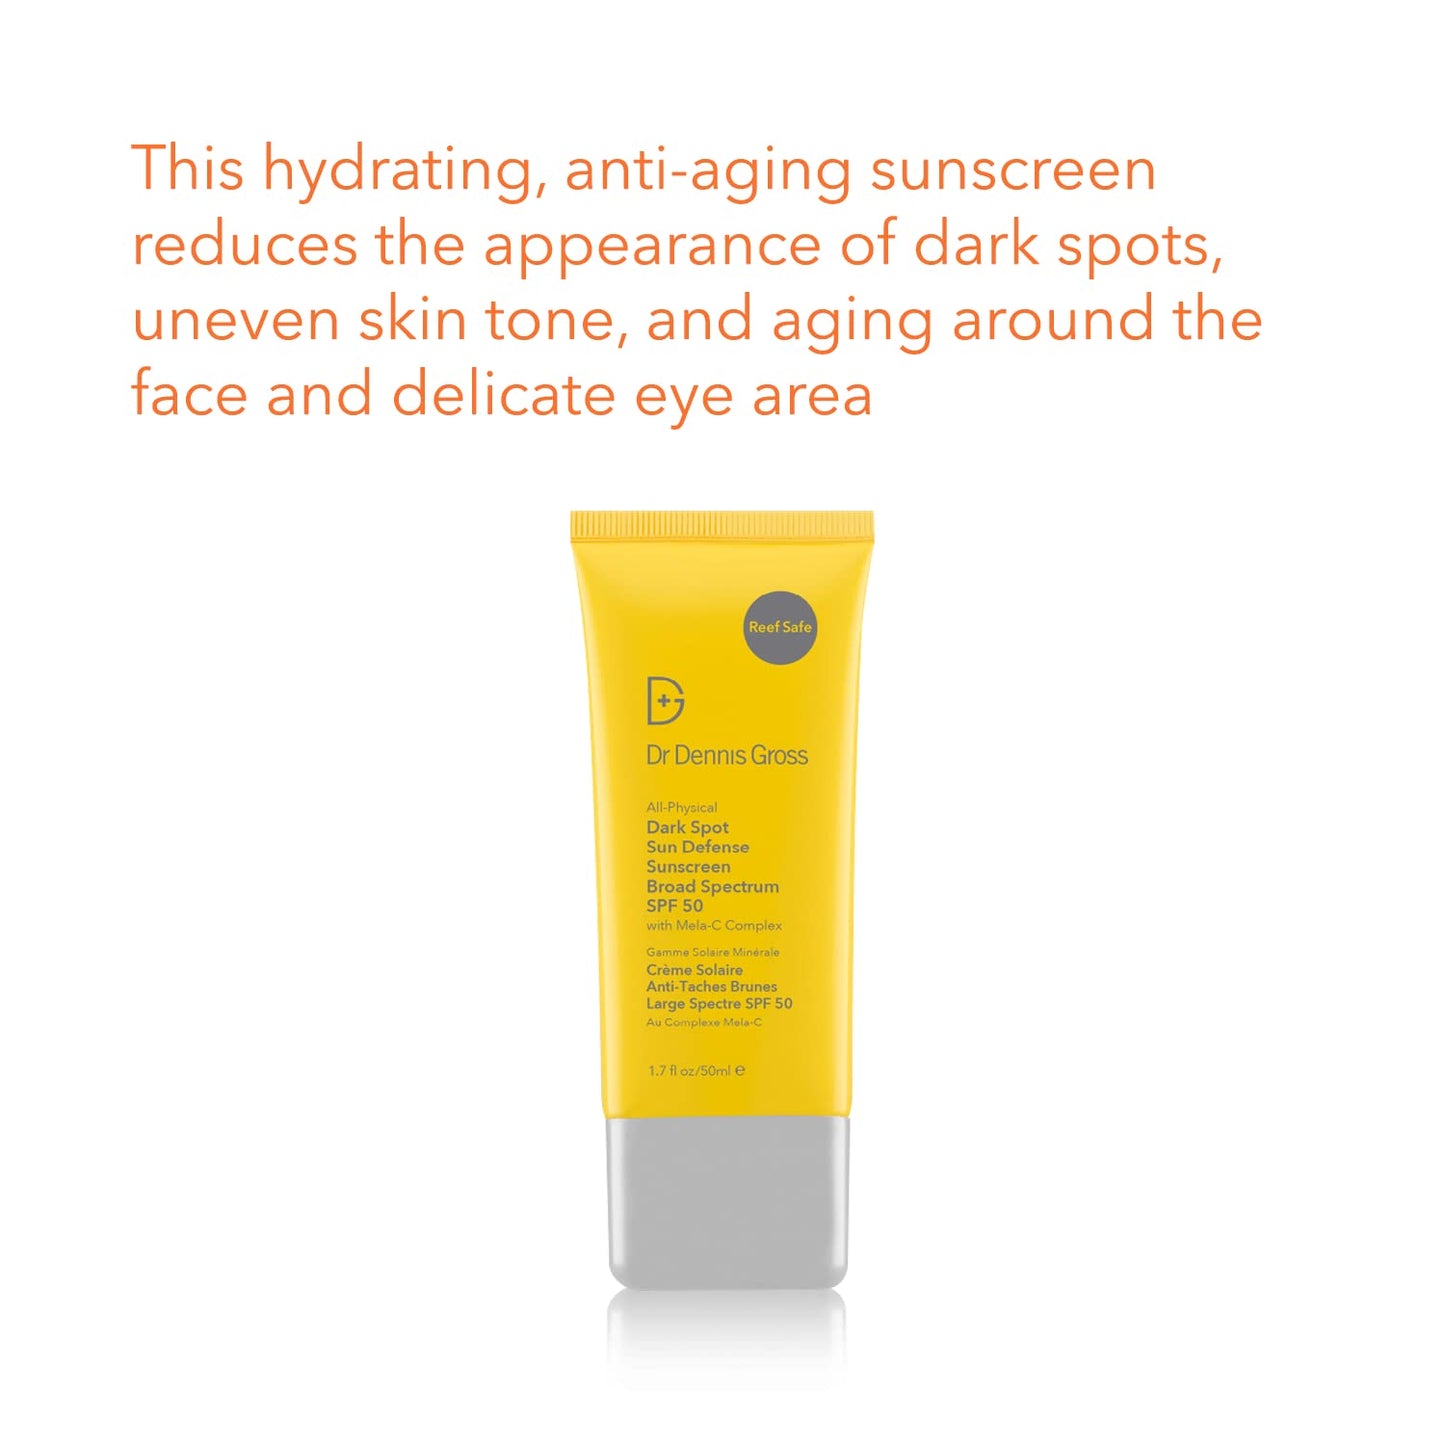 Dr. Dennis Gross Dark Spot Sun Defense Sunscreen Broad Spectrum SPF 50: for Sun Damage, Dark Spots, Uneven Skin Tone, Fine Lines, and Wrinkles, 1.7 fl oz